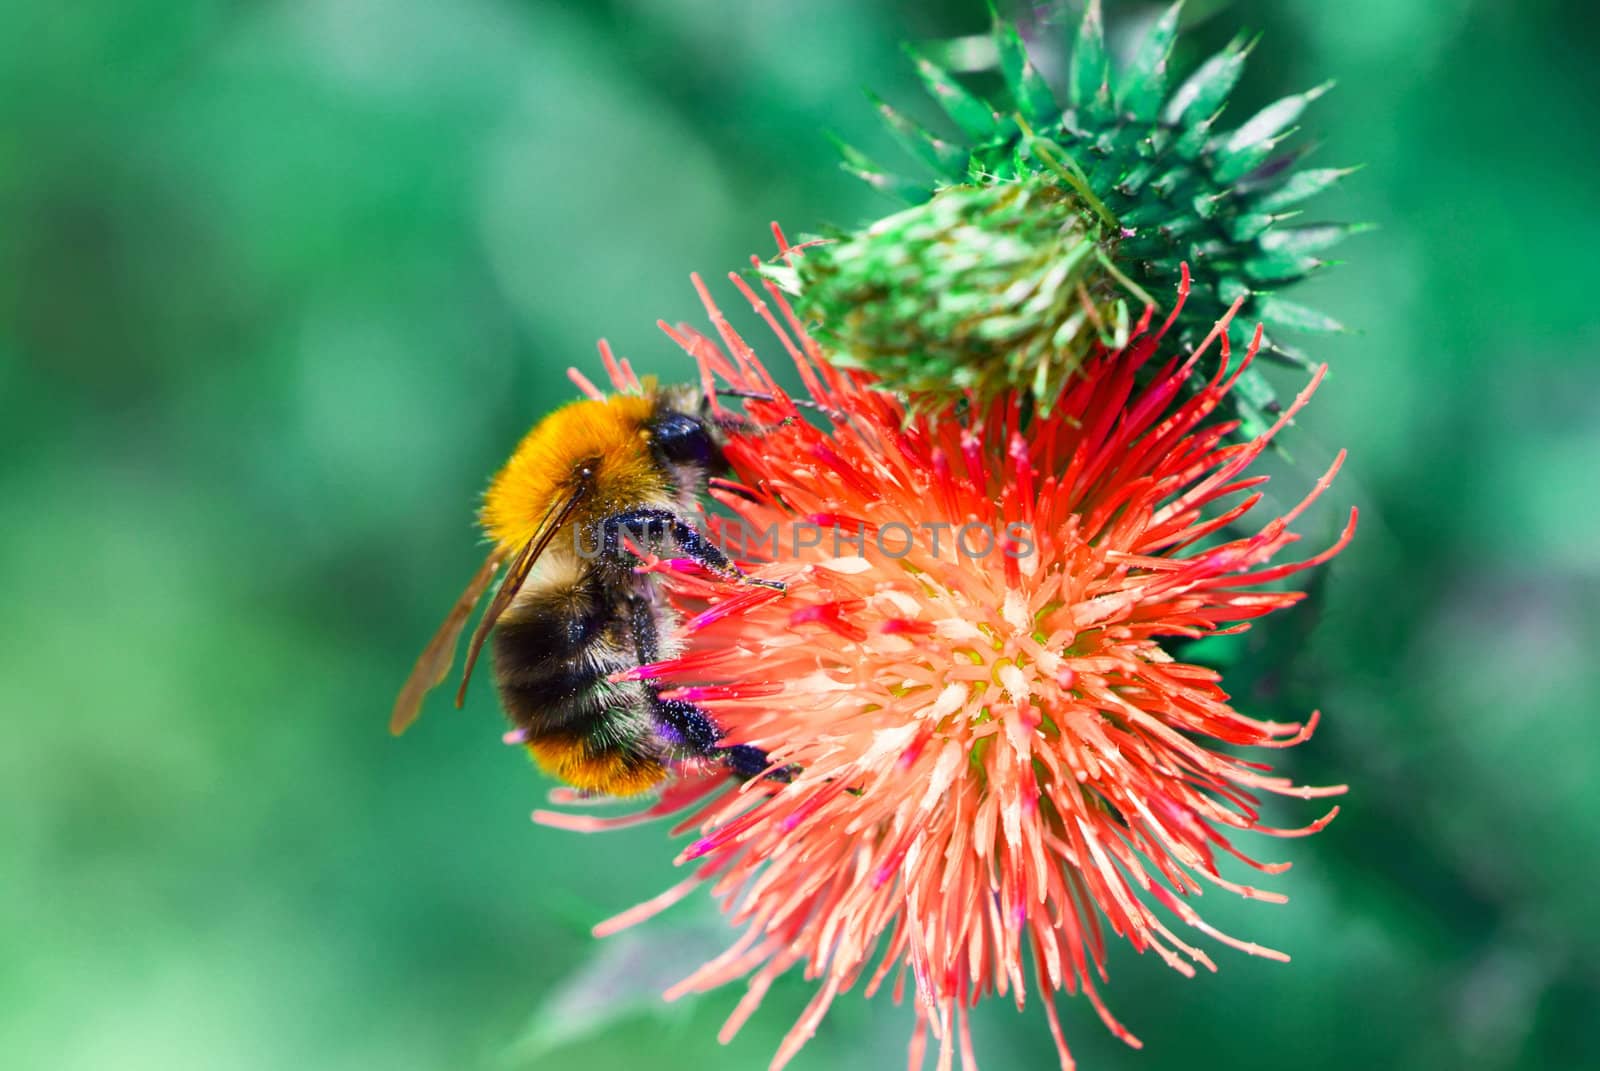 Bee on flower by Olinkau